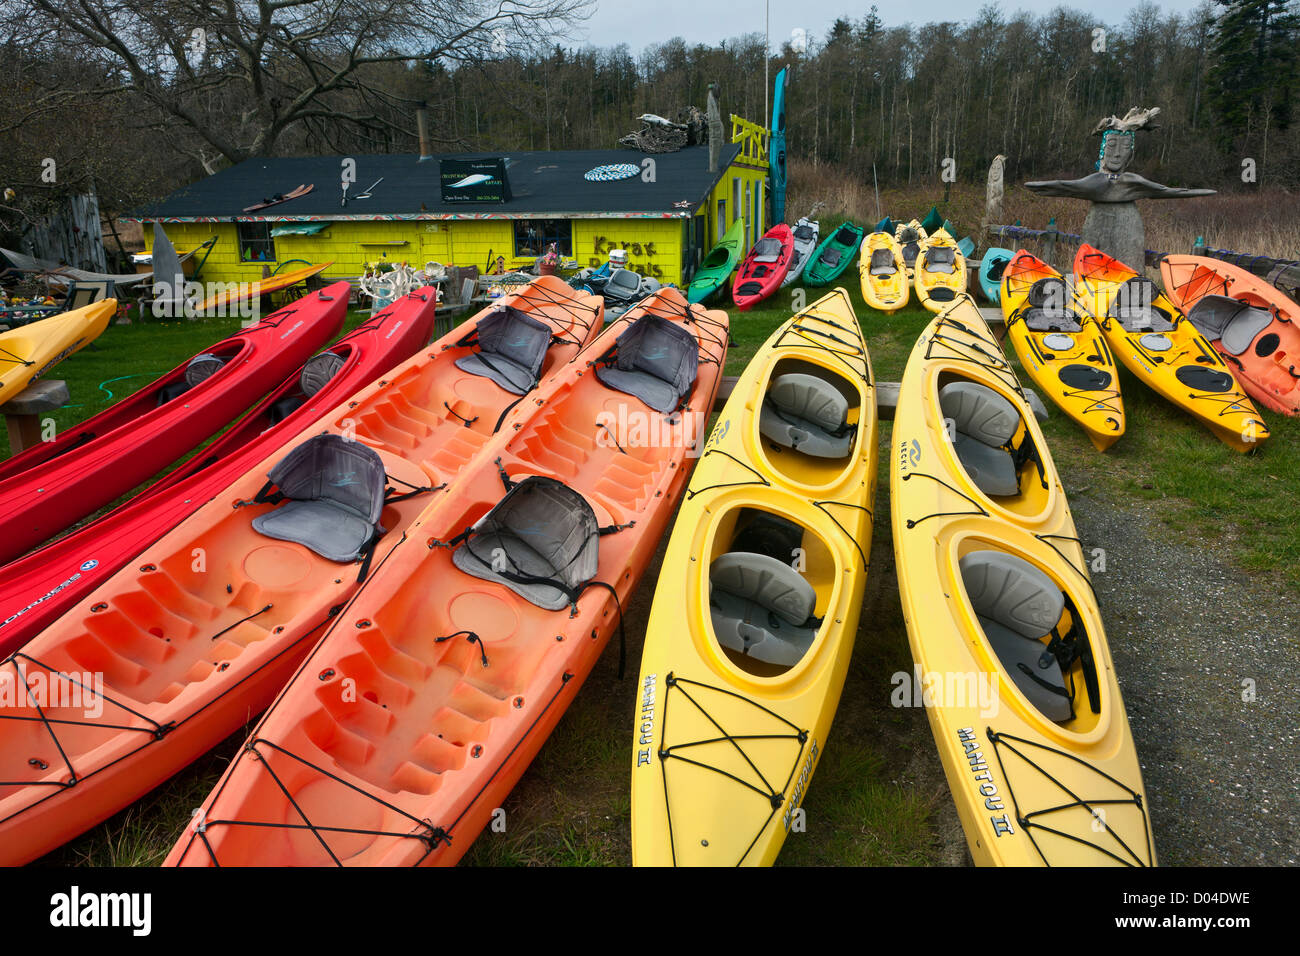 WA06488-00...WASHINGTON - Crescent Beach Kayaks in the town of Eastsound on Orcas Island. Stock Photo